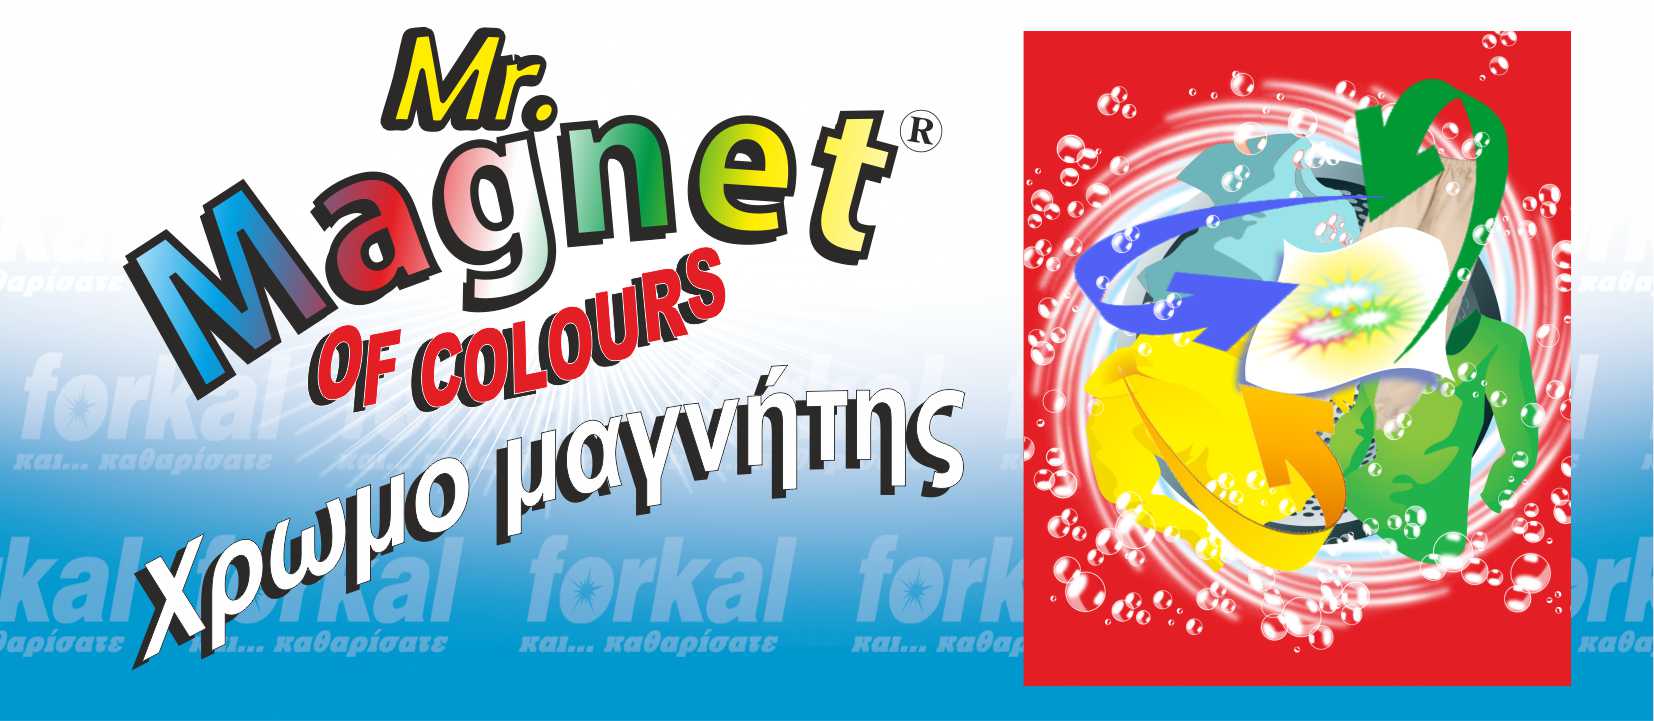 Colour  Magnet - Mr Magnet